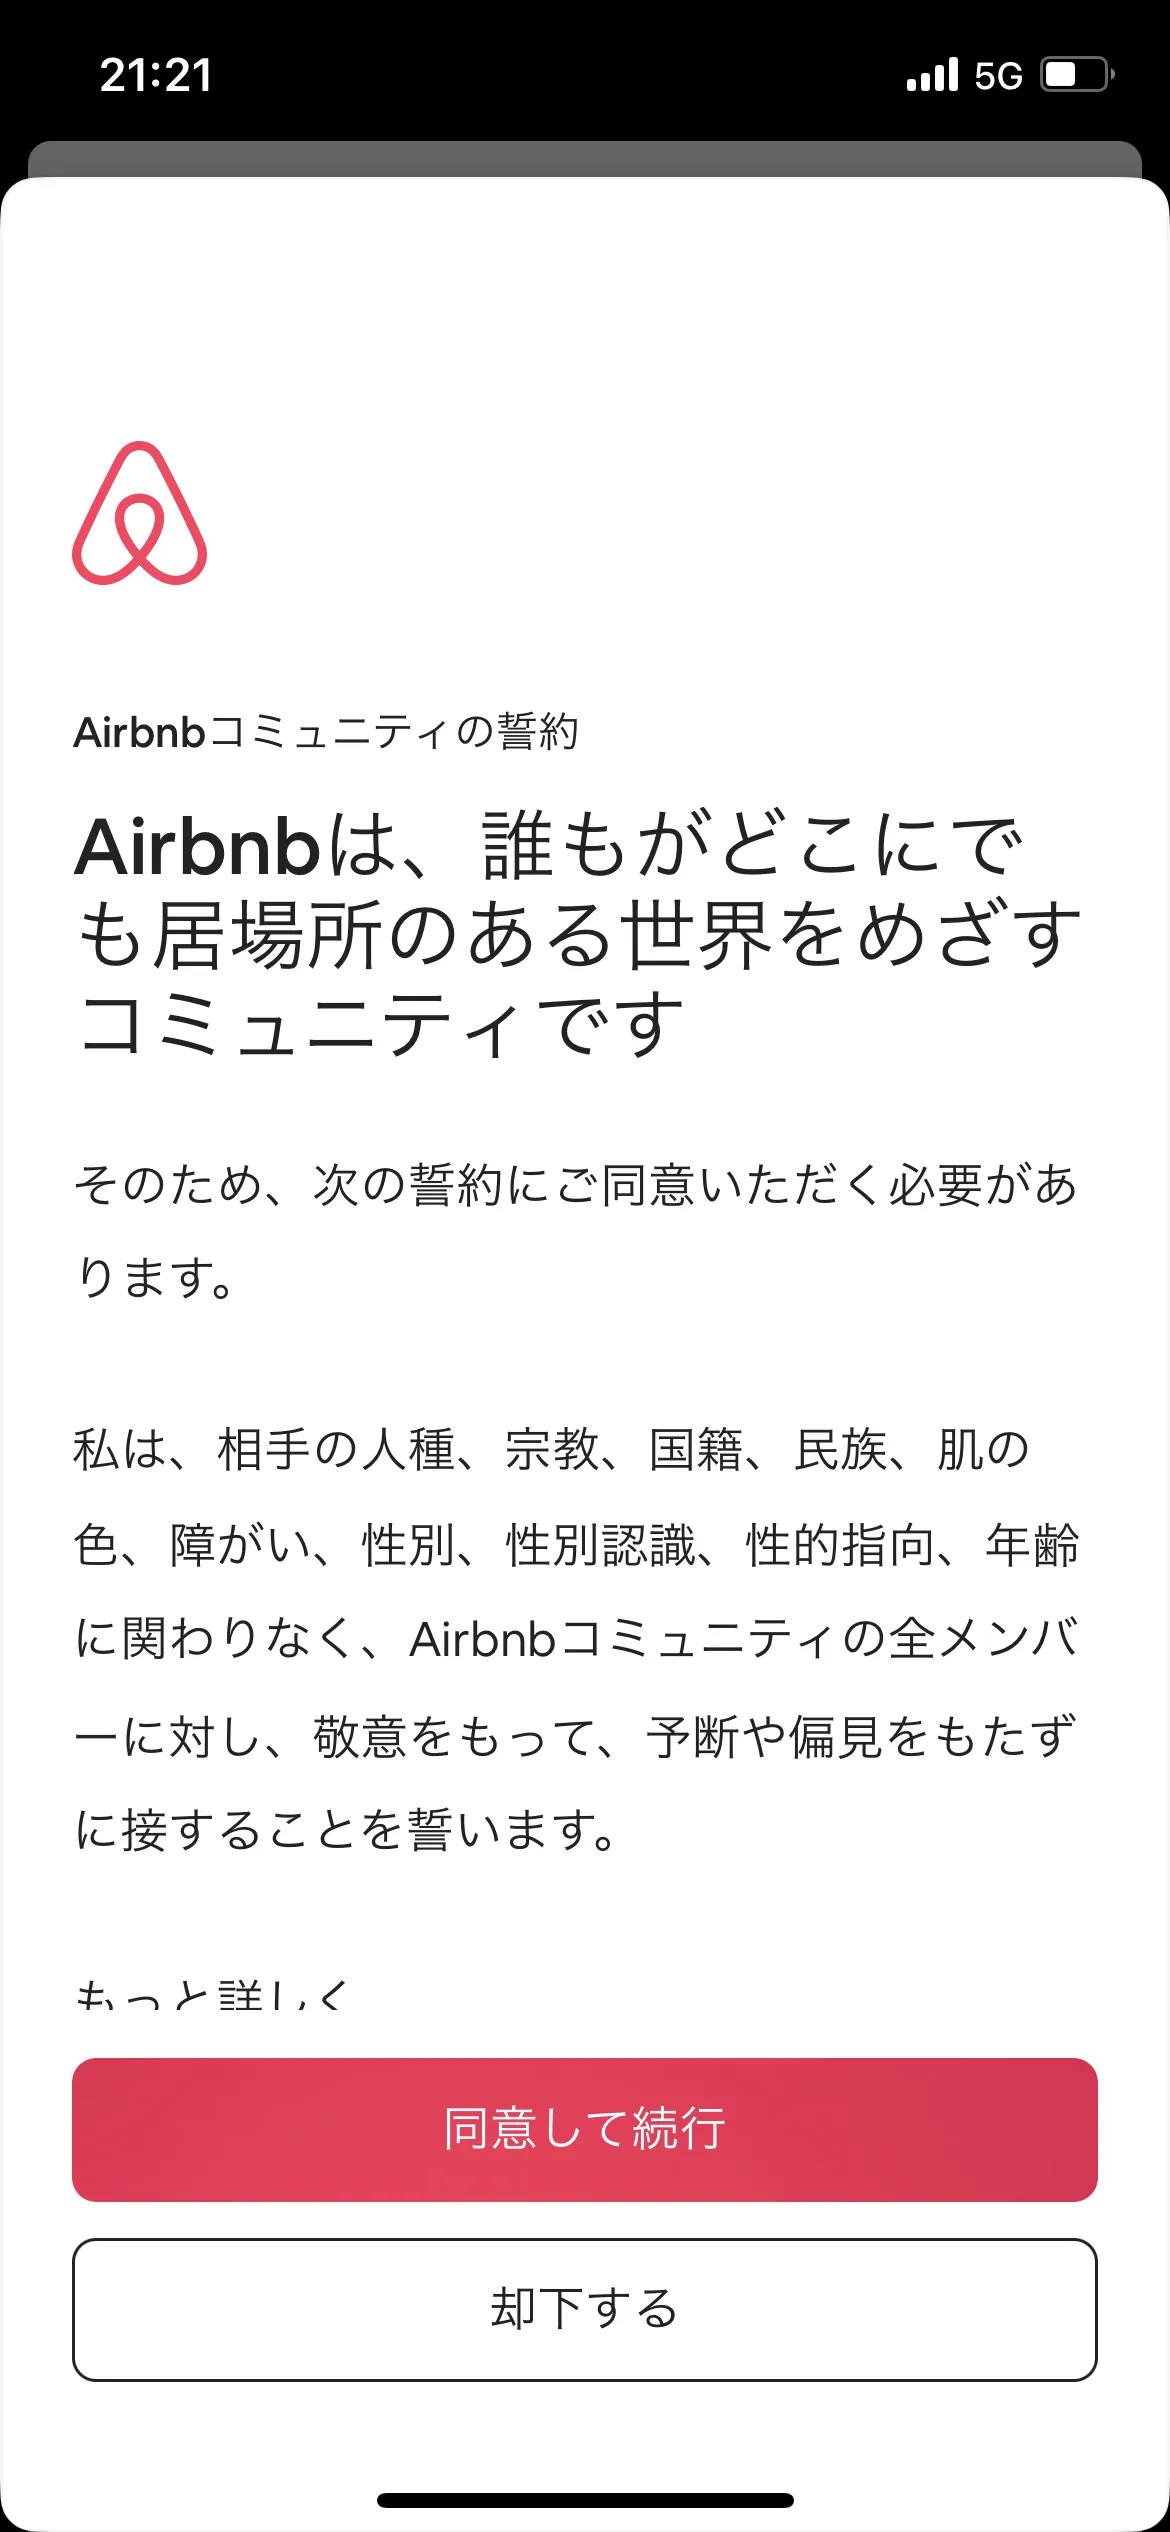 Airbnb オンボーディング screen